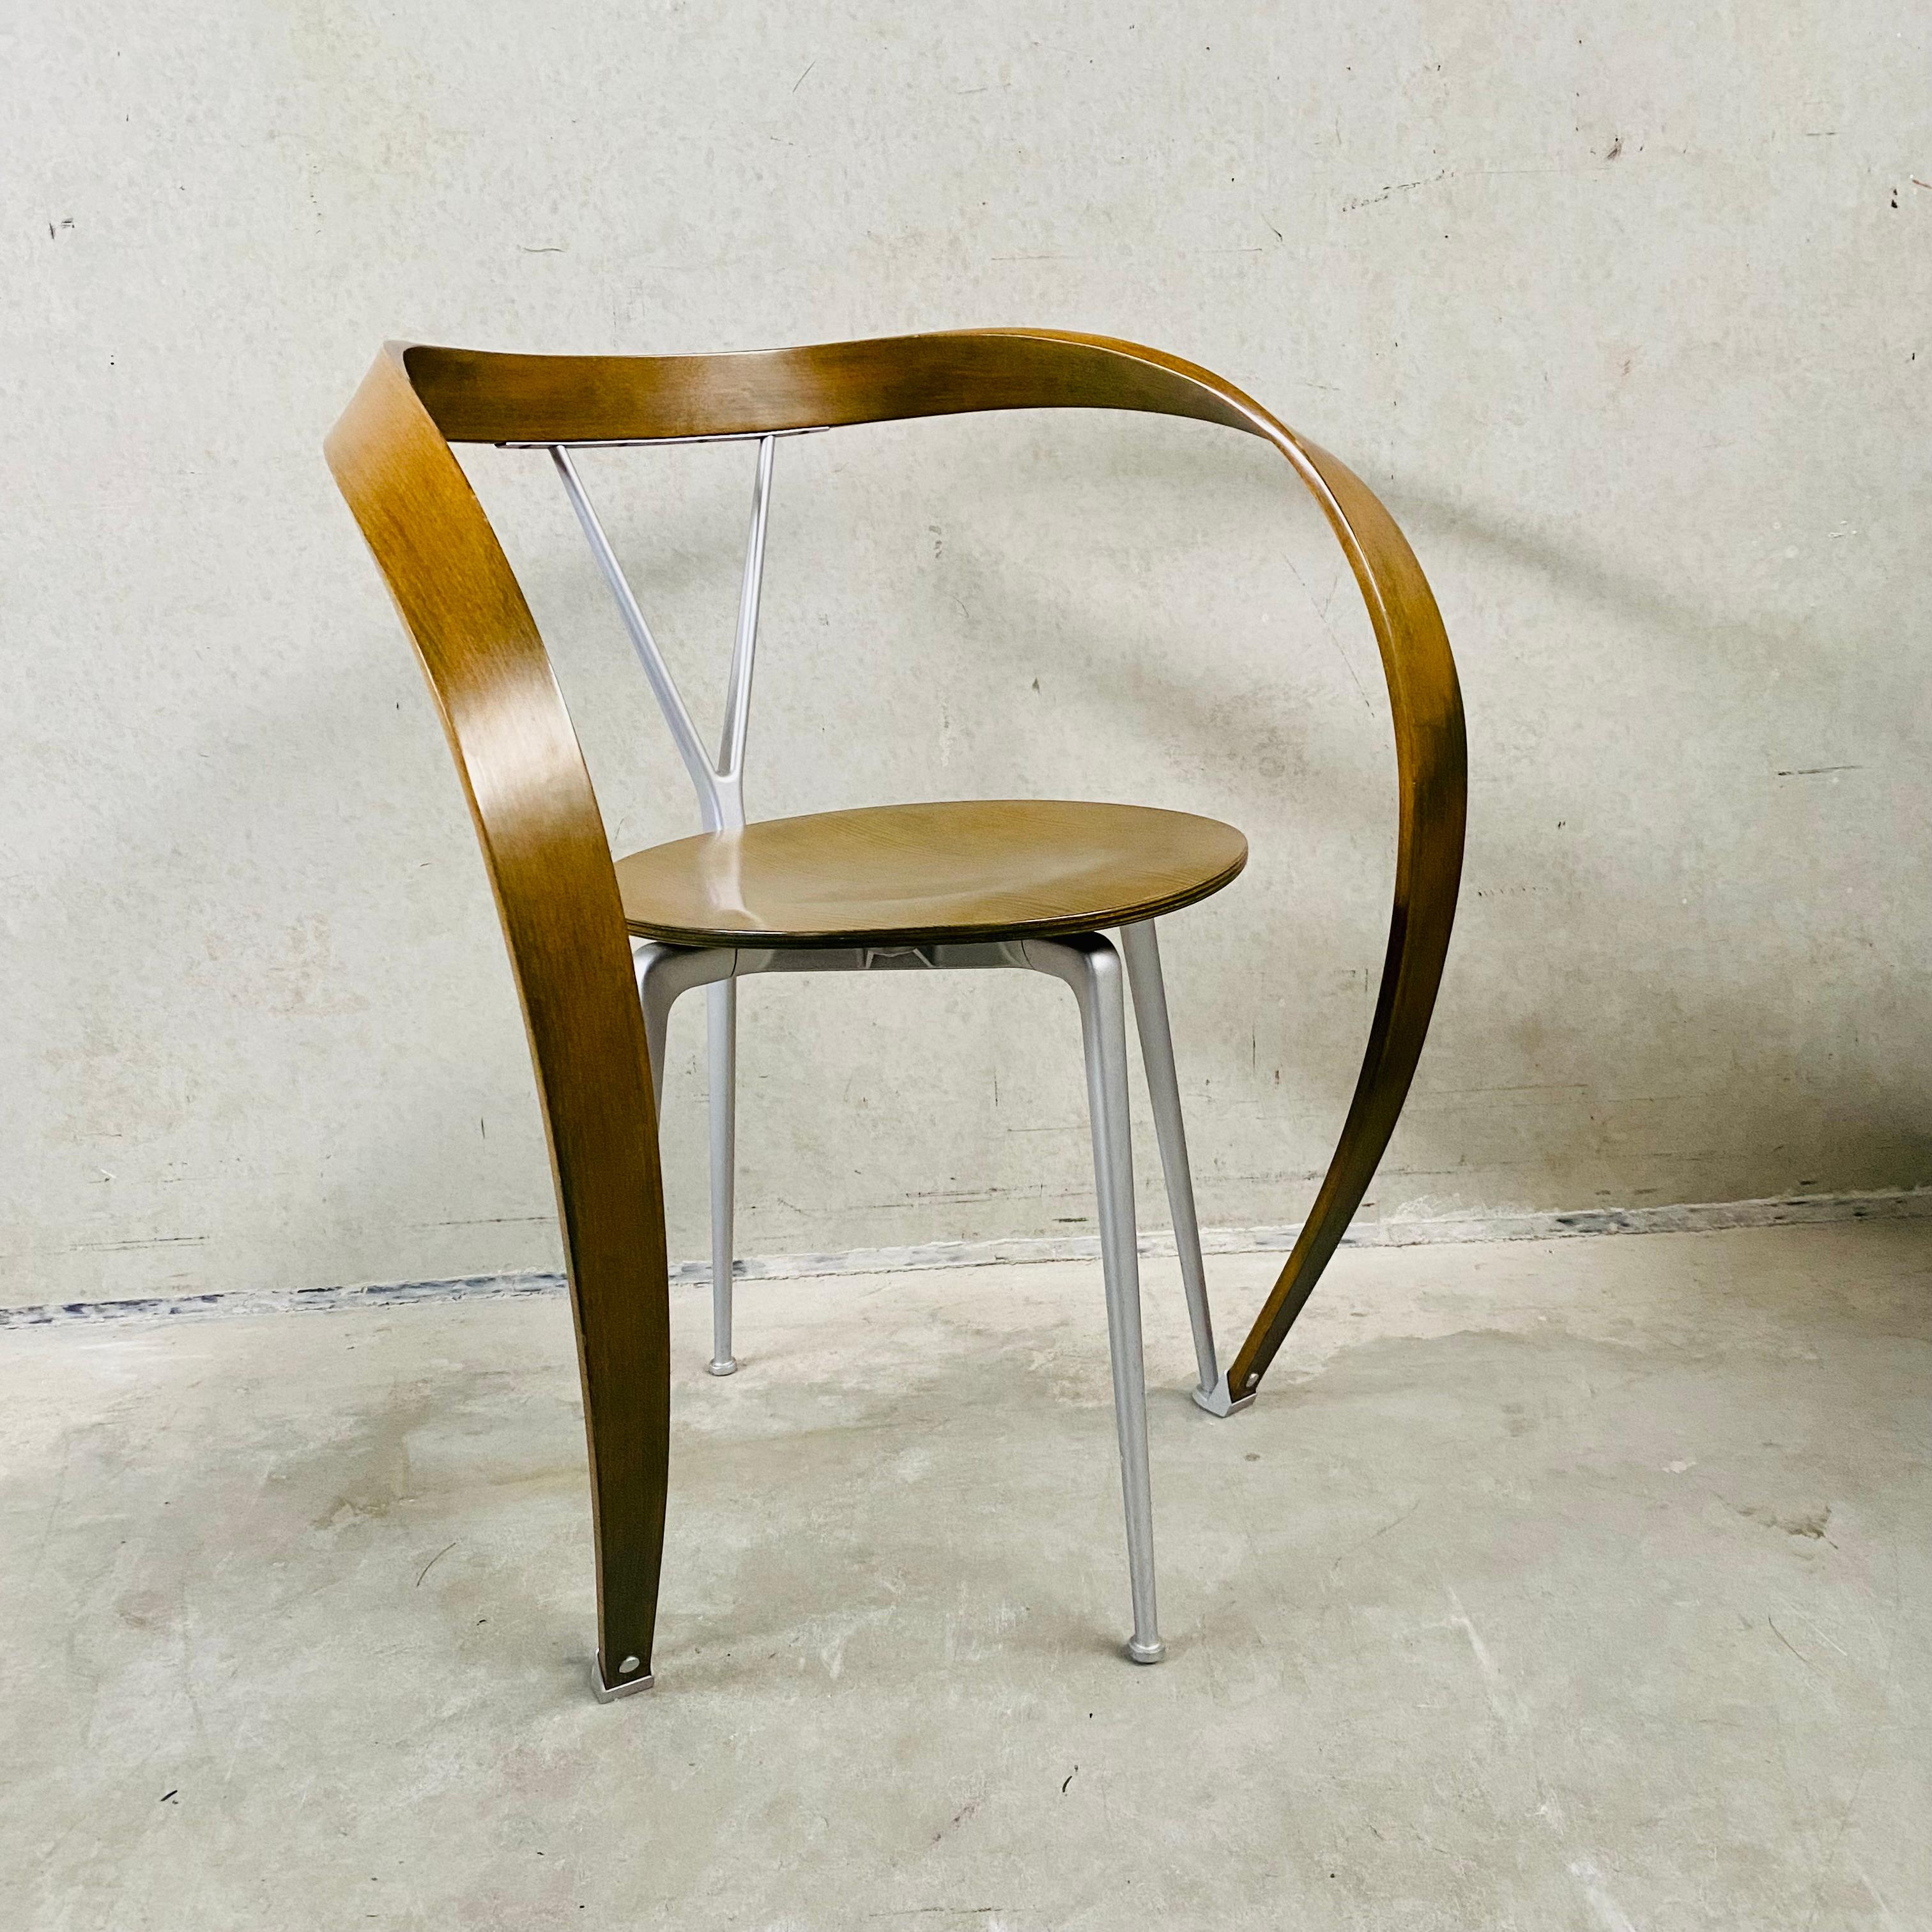 Steel Revers Chair by Andrea Branzi for Cassina Italian Design 1993 For Sale